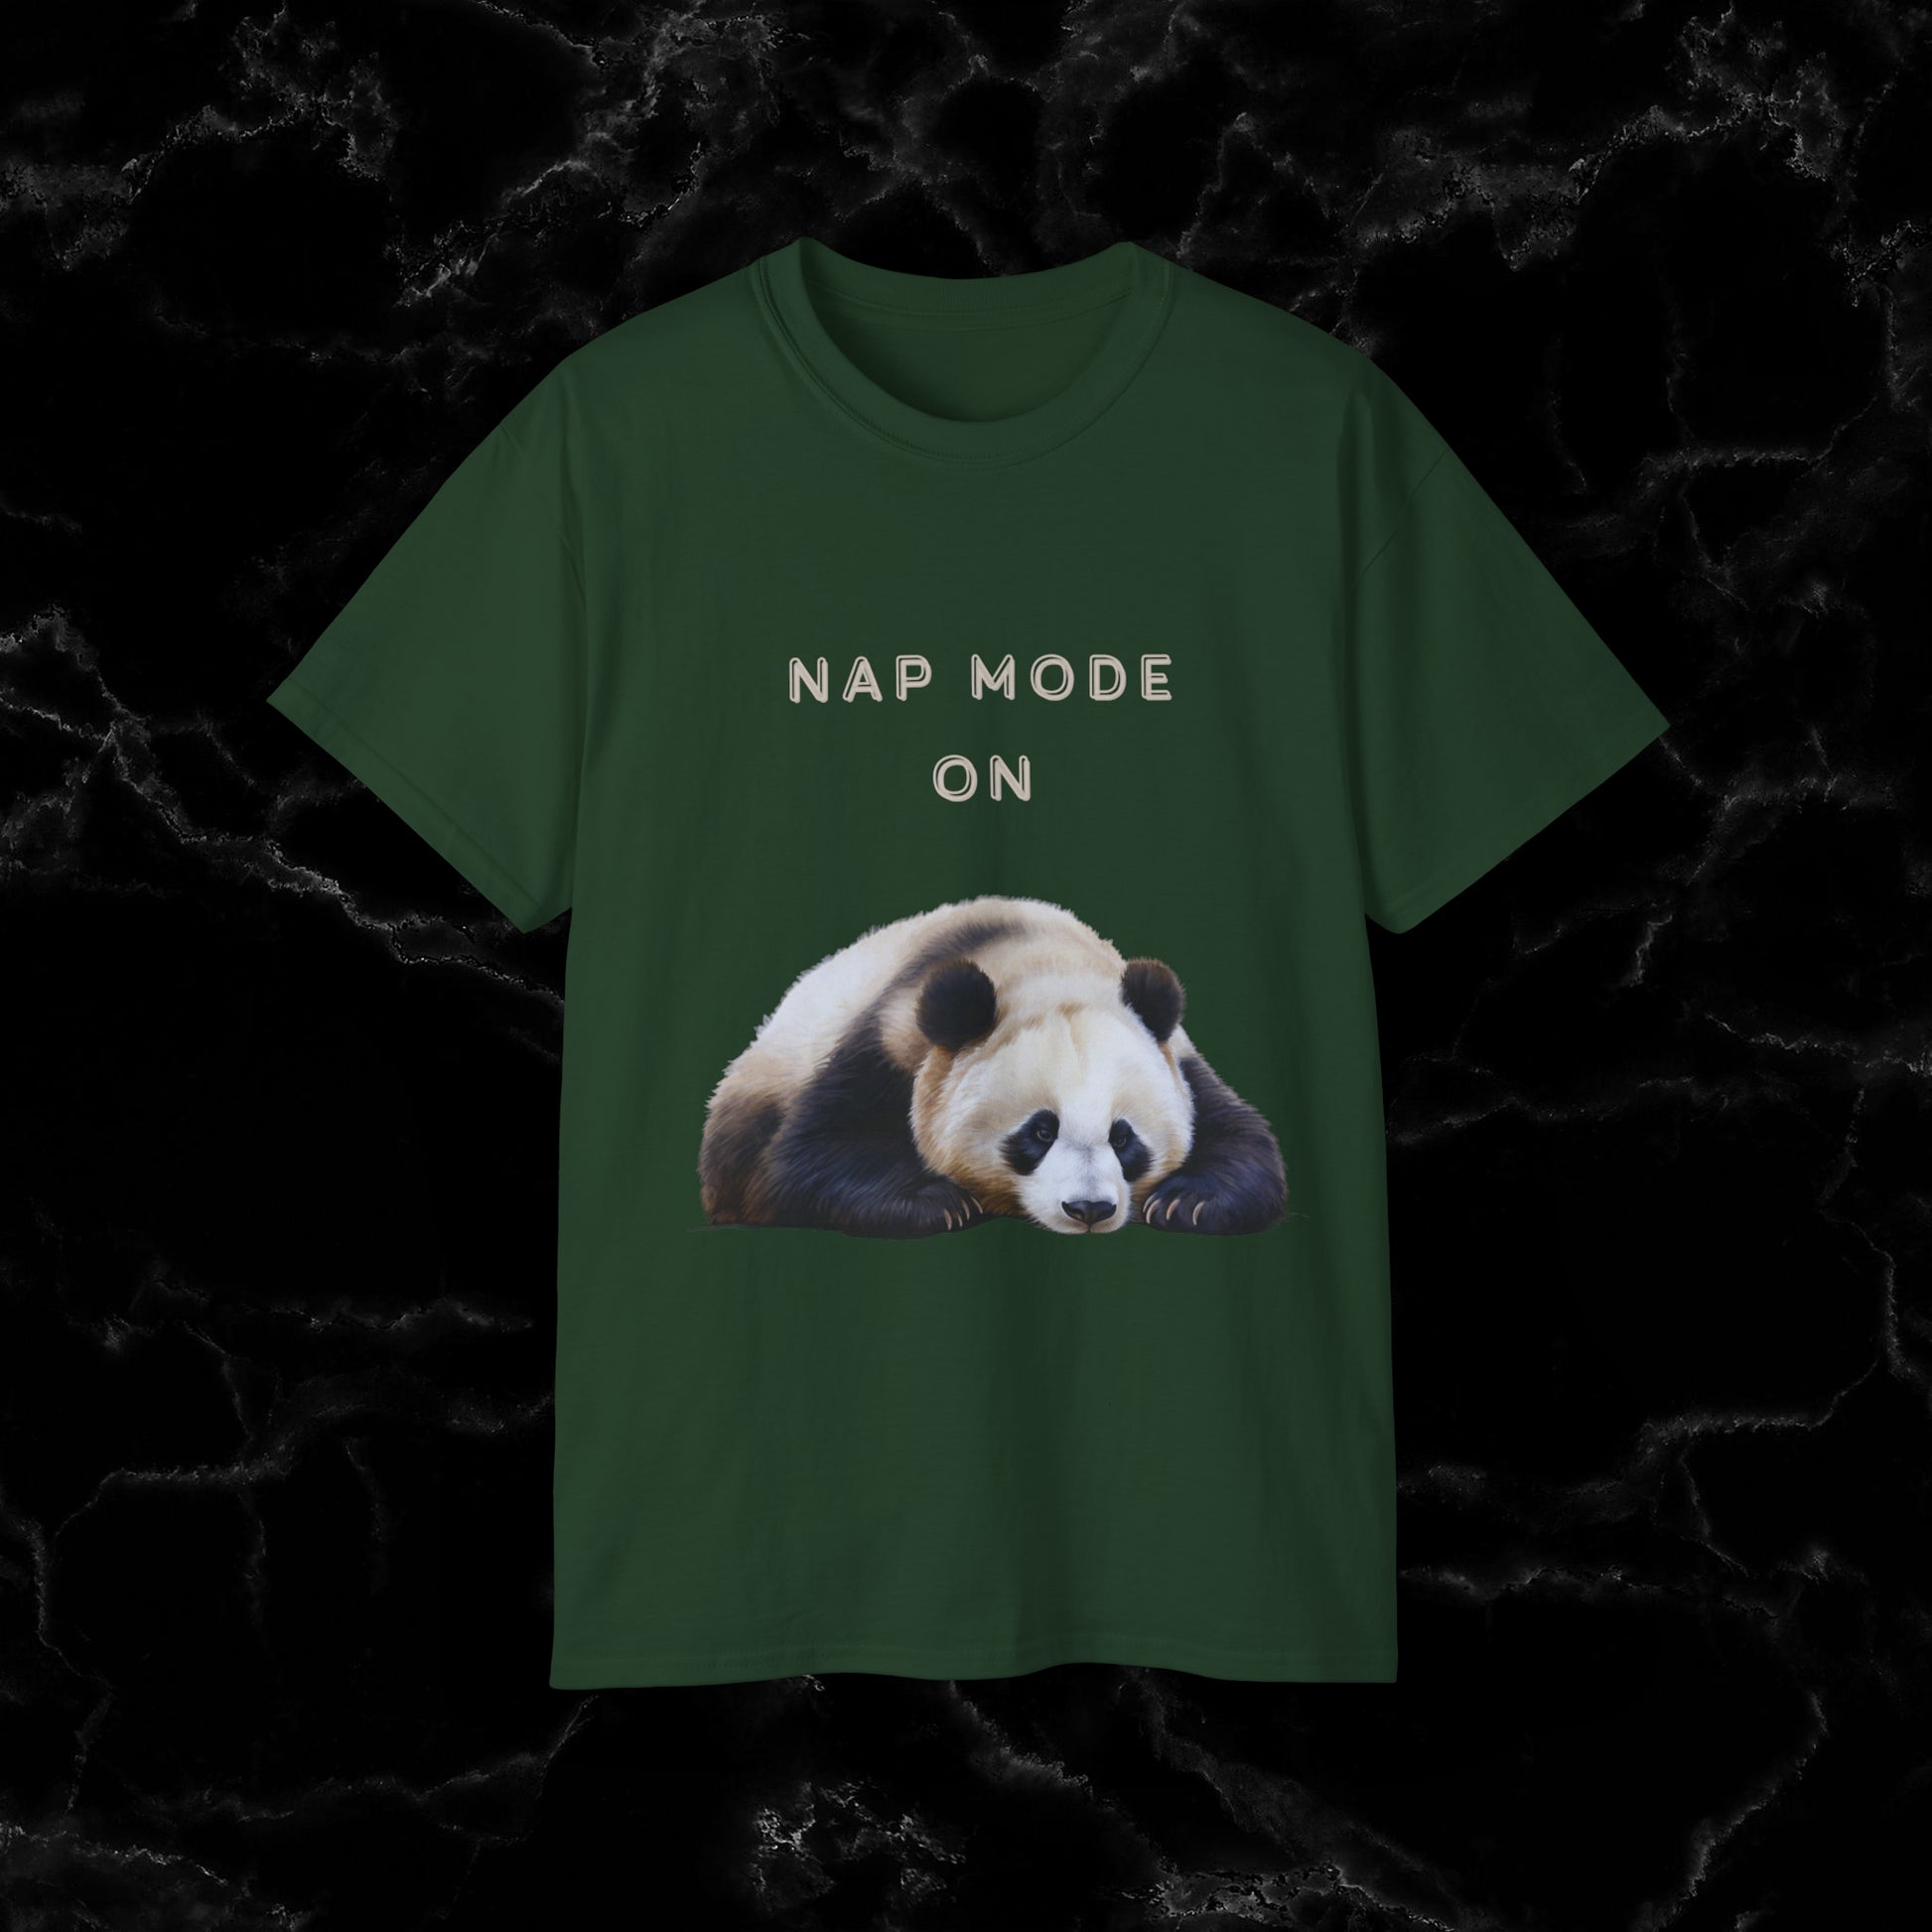 Nap Time Panda Unisex Funny Tee - Hilarious Panda Nap Design T-Shirt Forest Green S 